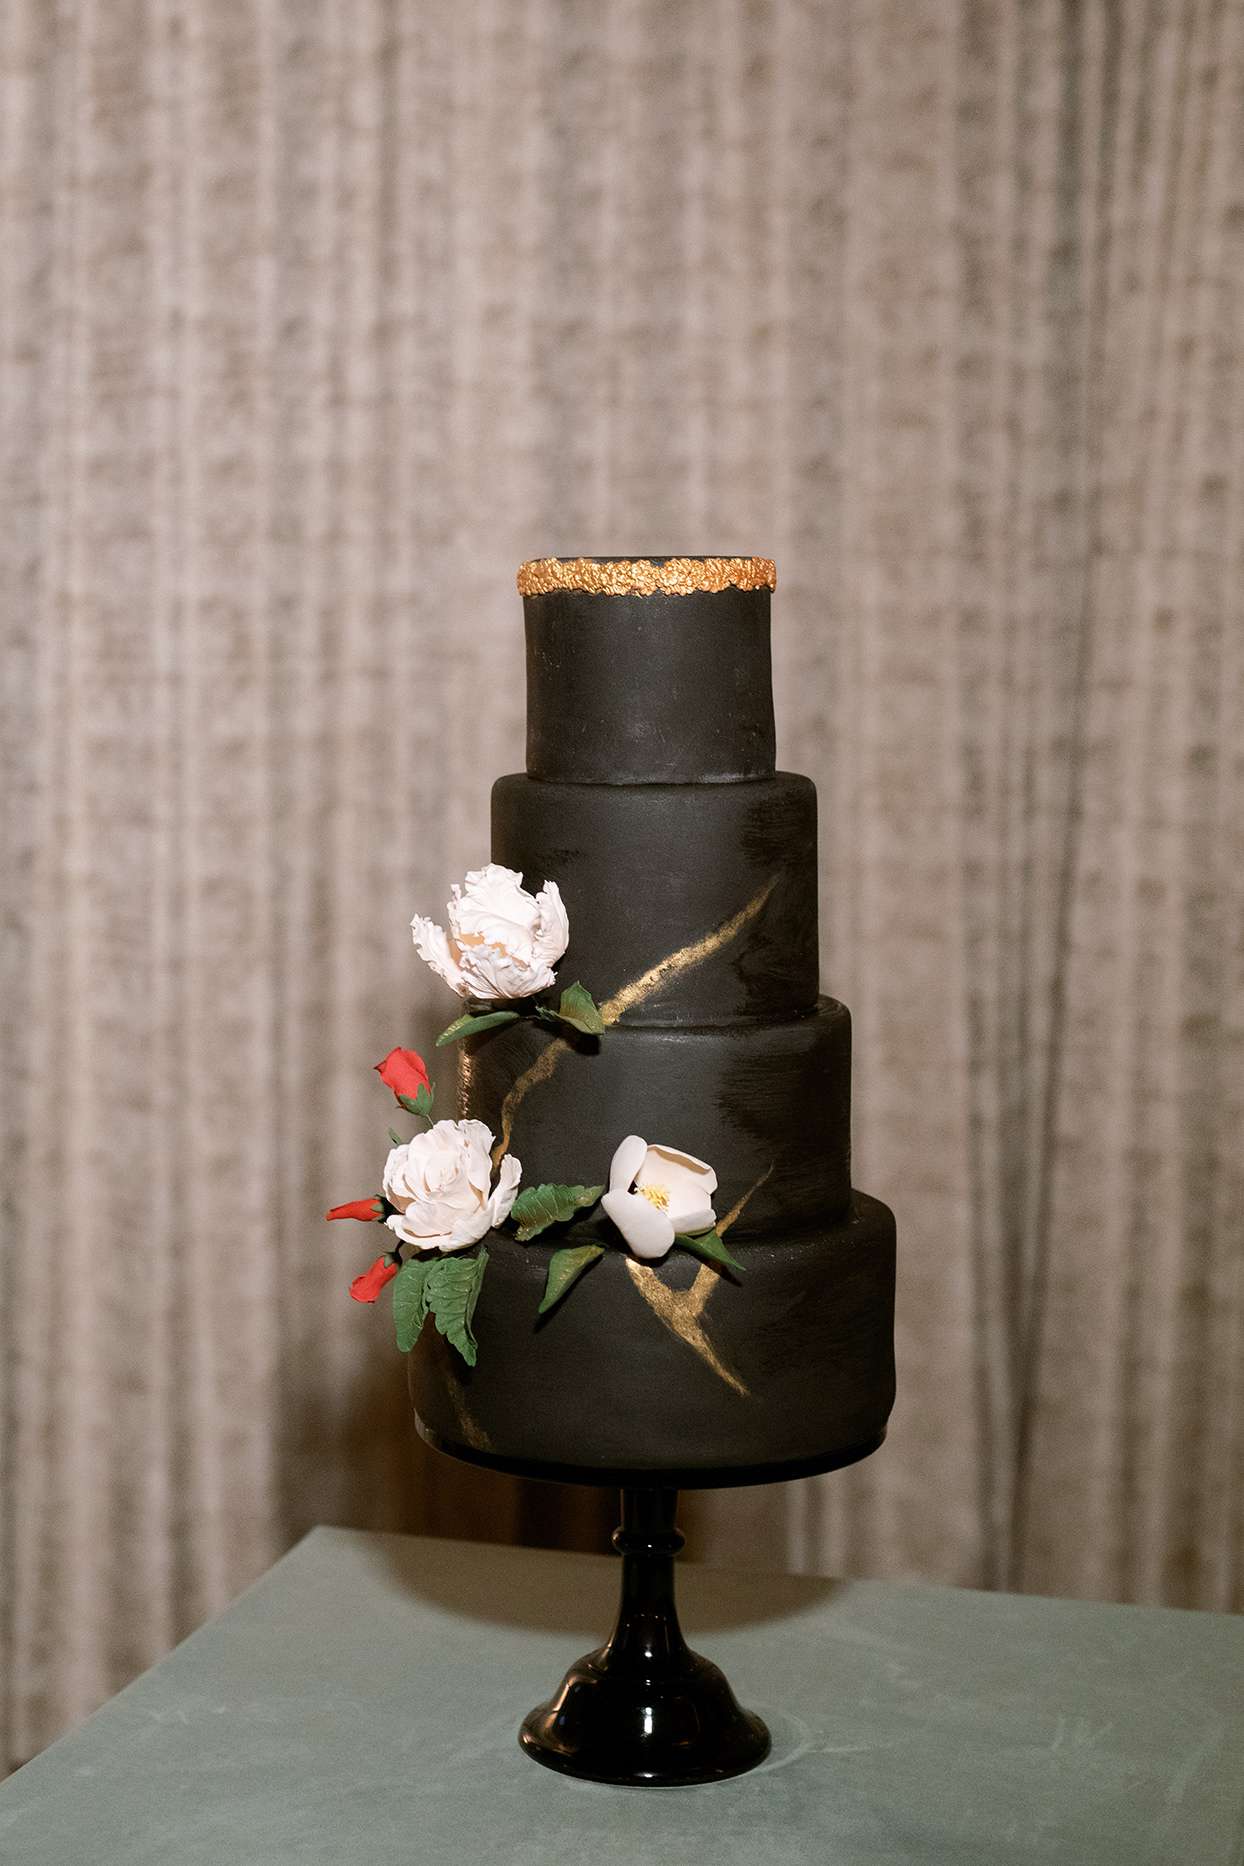 jason justin wedding black cake with flowers